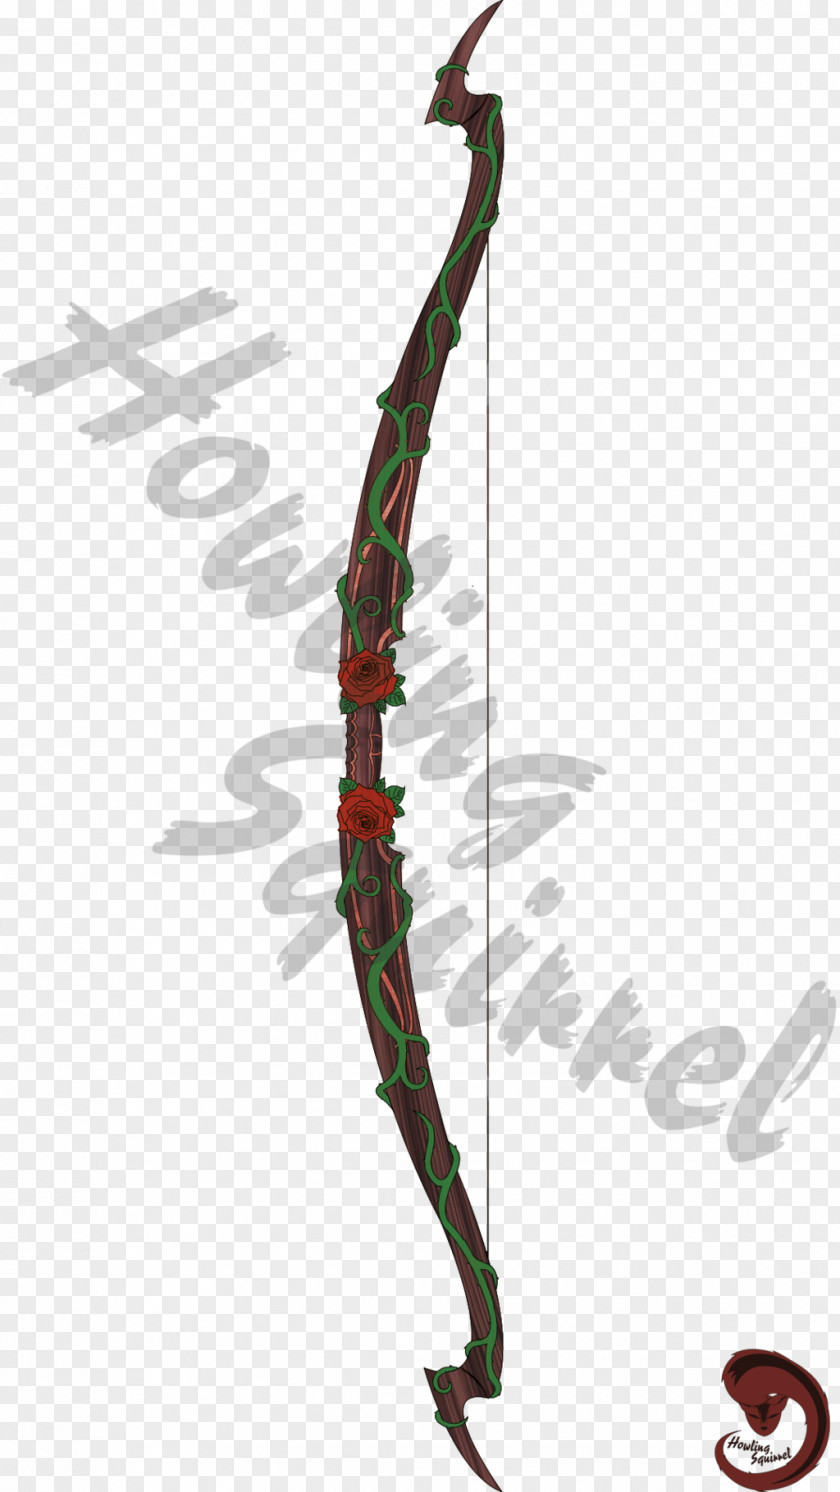 Thorns Ranged Weapon Tree Twig Hoveniersbedrijf/Kwekerij Alfred Scholing PNG